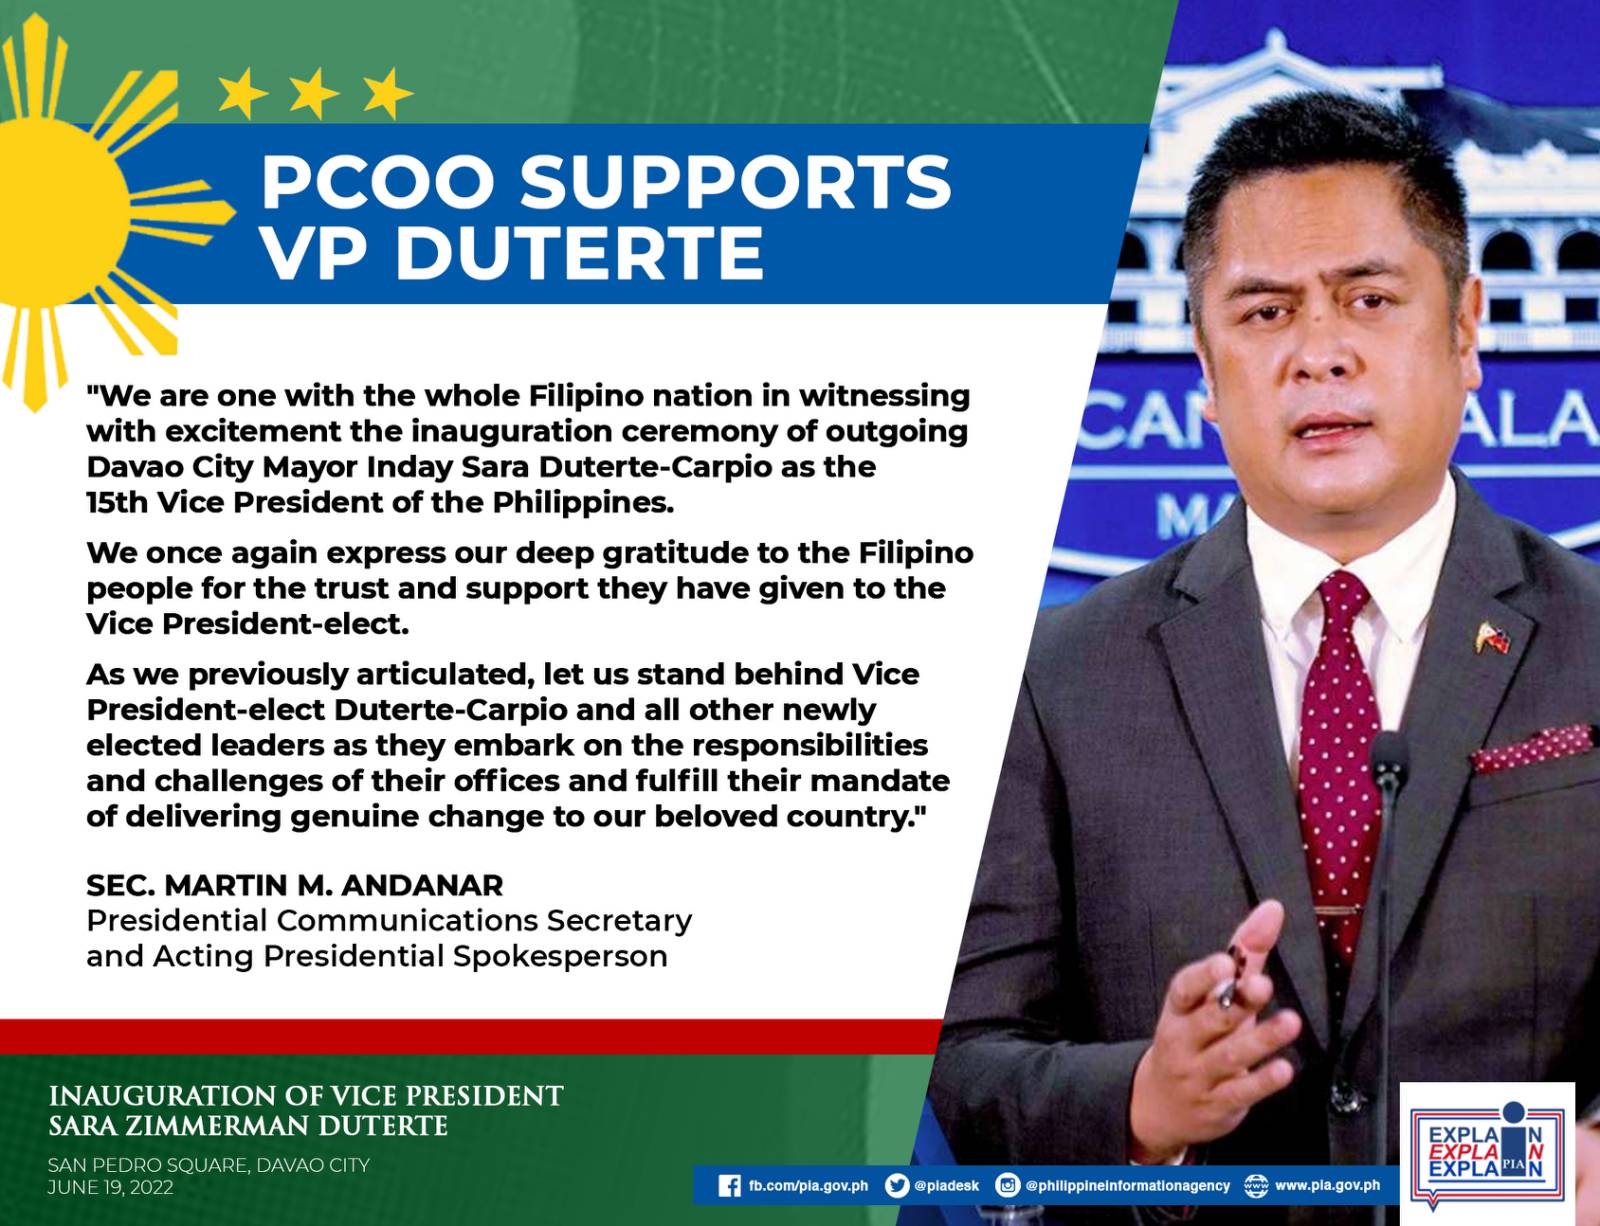 Statement on the inauguration of Mayor Inday Sara Duterte-Carpio as Vice President